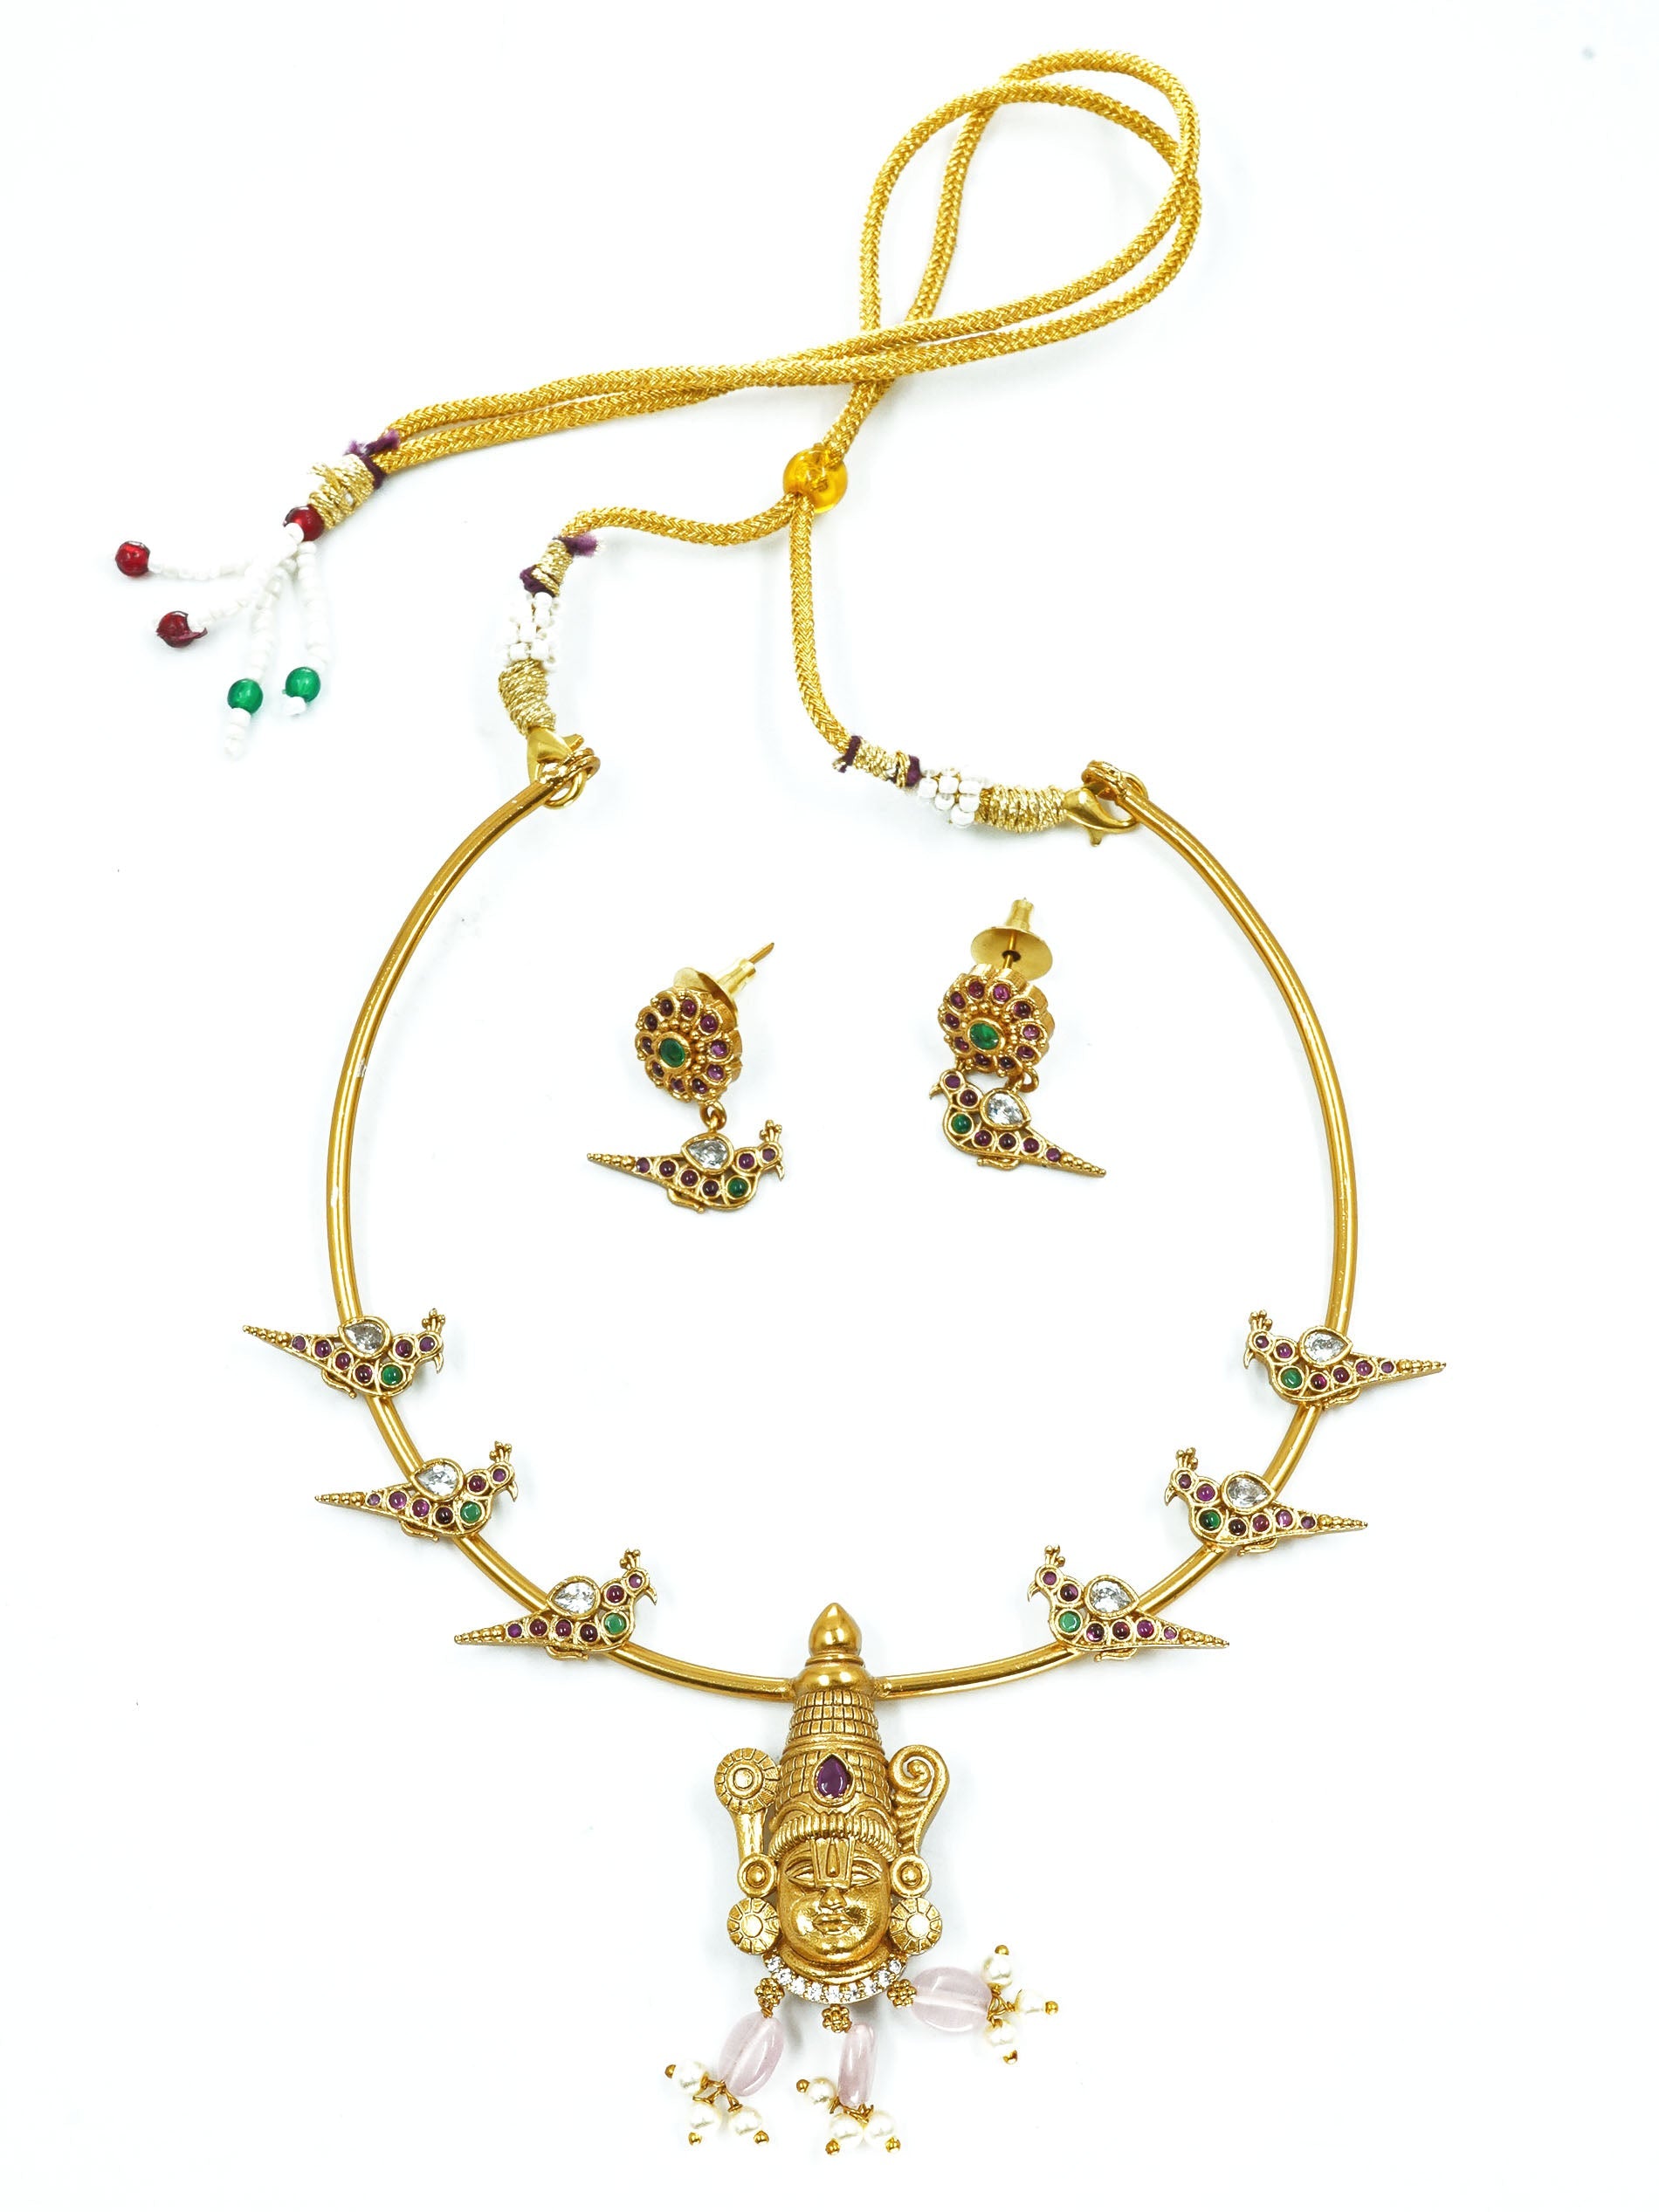 Premium Gold Plated Exclusive designer Pipe Necklace Set 13321N